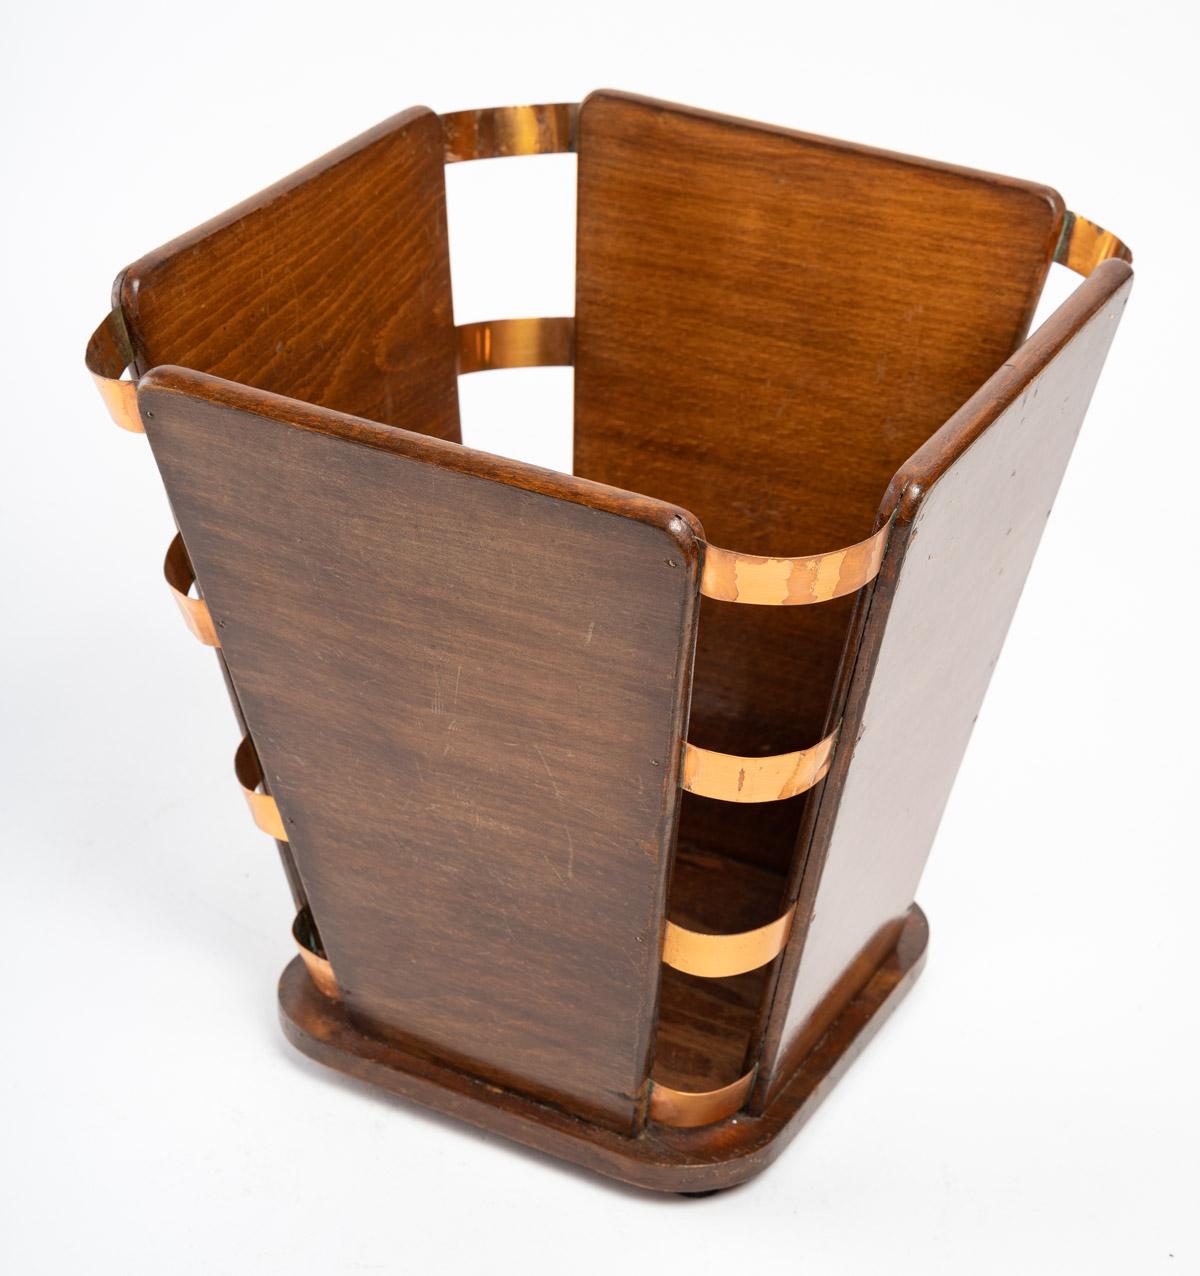 Copper Ruhlmann's Office Wastepaper Basket, 1930-1940